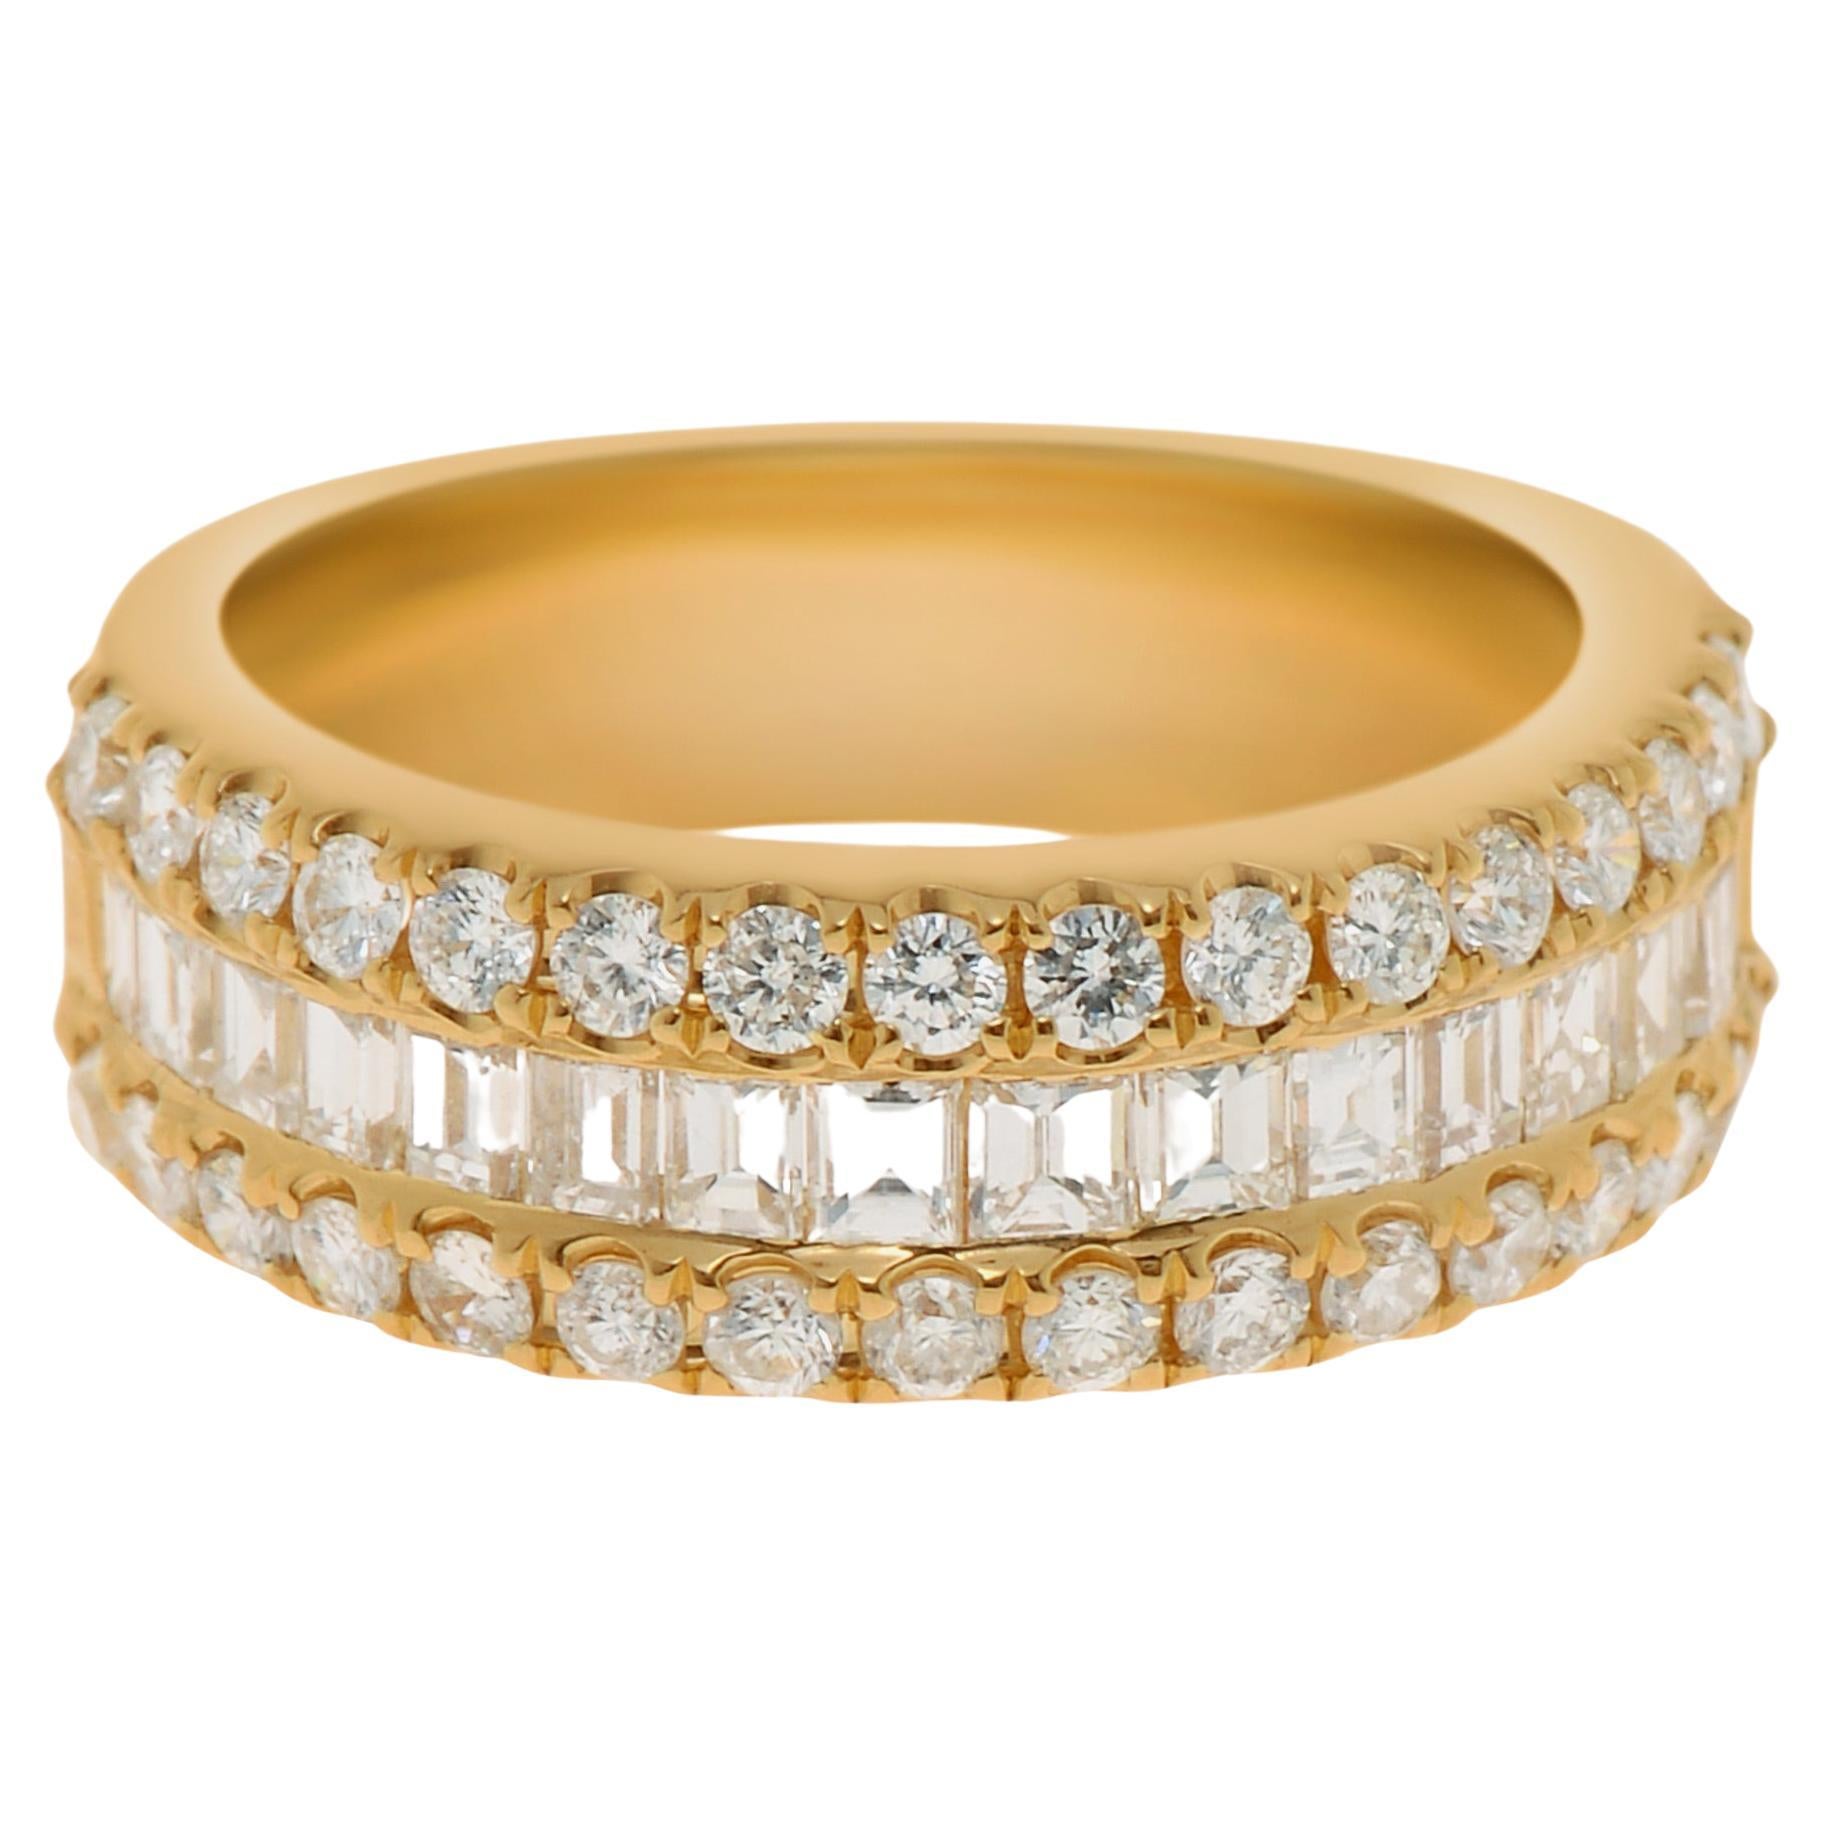 Tresorra 18K Yellow Gold, Diamond Band Ring Sz. 6.25 For Sale